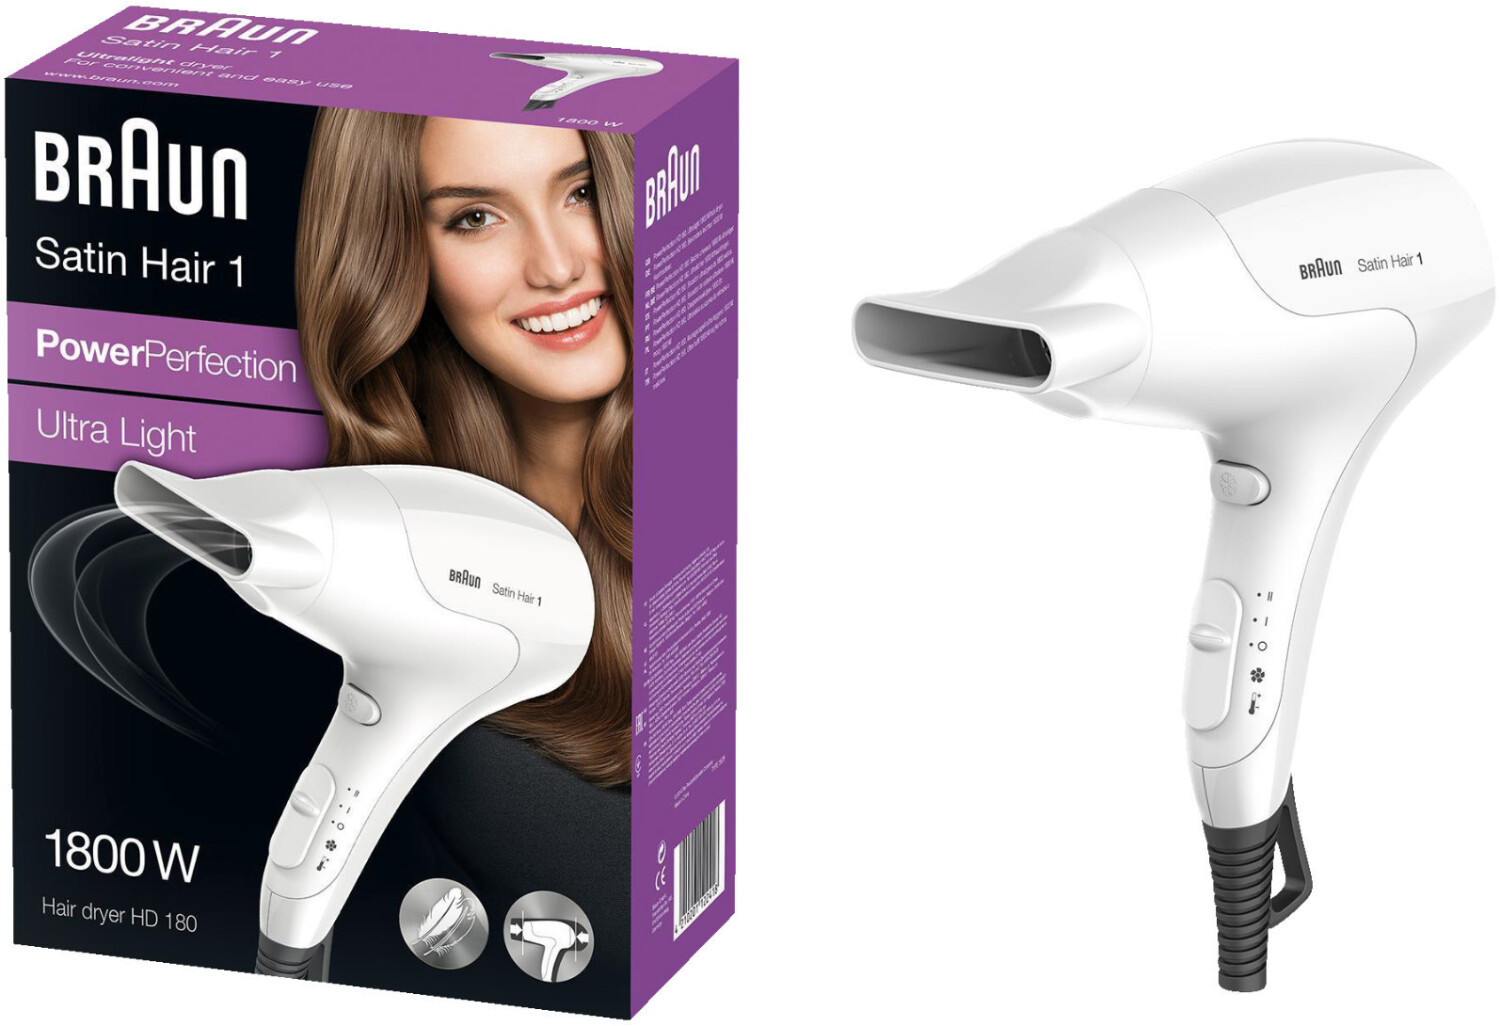 Braun Satin Hair 1 PowerPerfection HD 180 ab 25,55 € | Preisvergleich bei